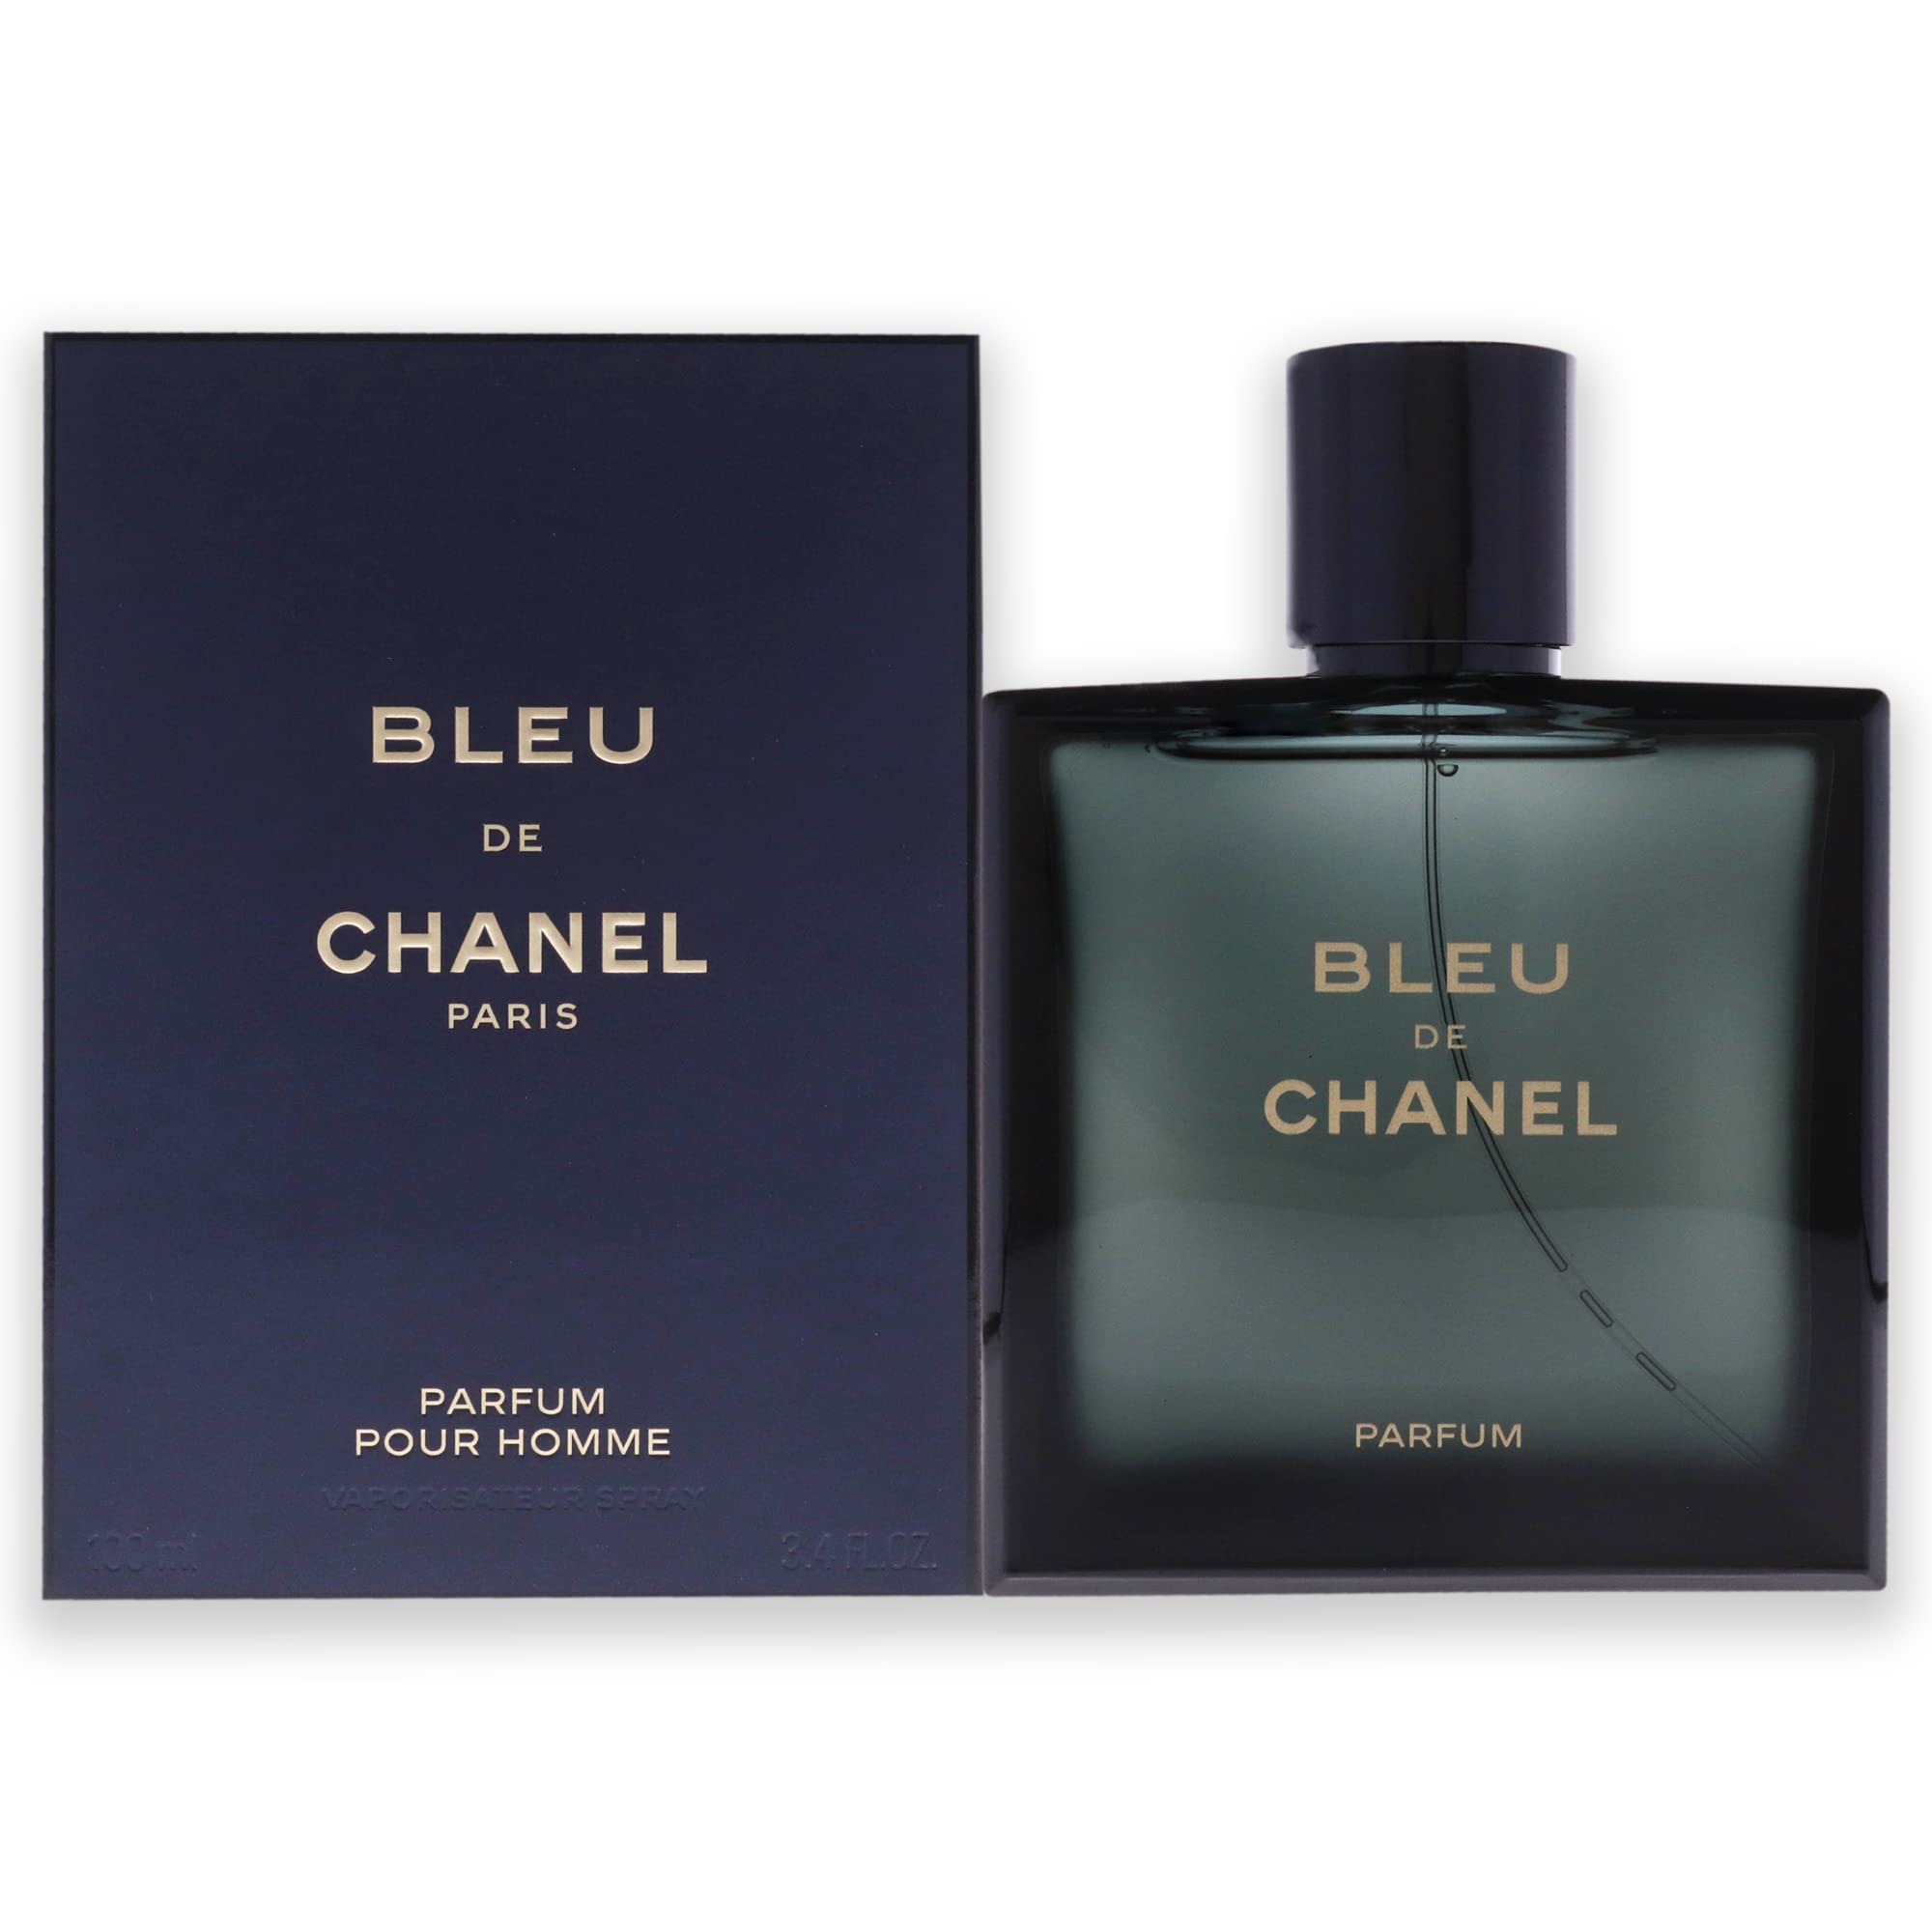 C H A N E L Coco Noir Eau De Parfum spray 34 OZ100 ml  Beauty   Personal Care  Amazoncom